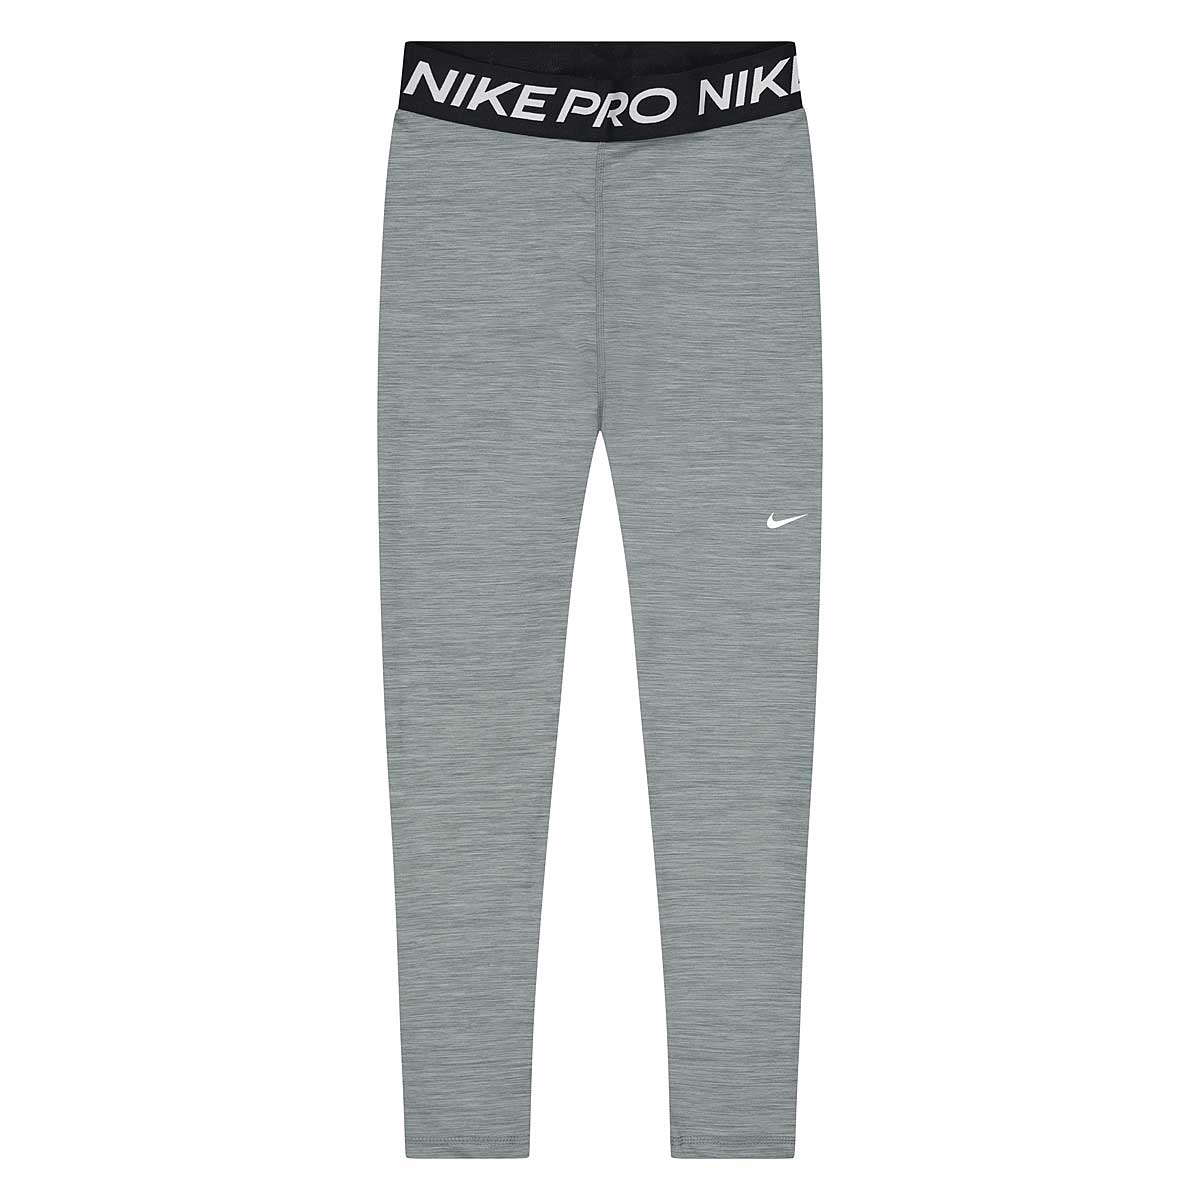 Nike Pro 365 Tight Womens, Smoke Grey/Htr/Black/White